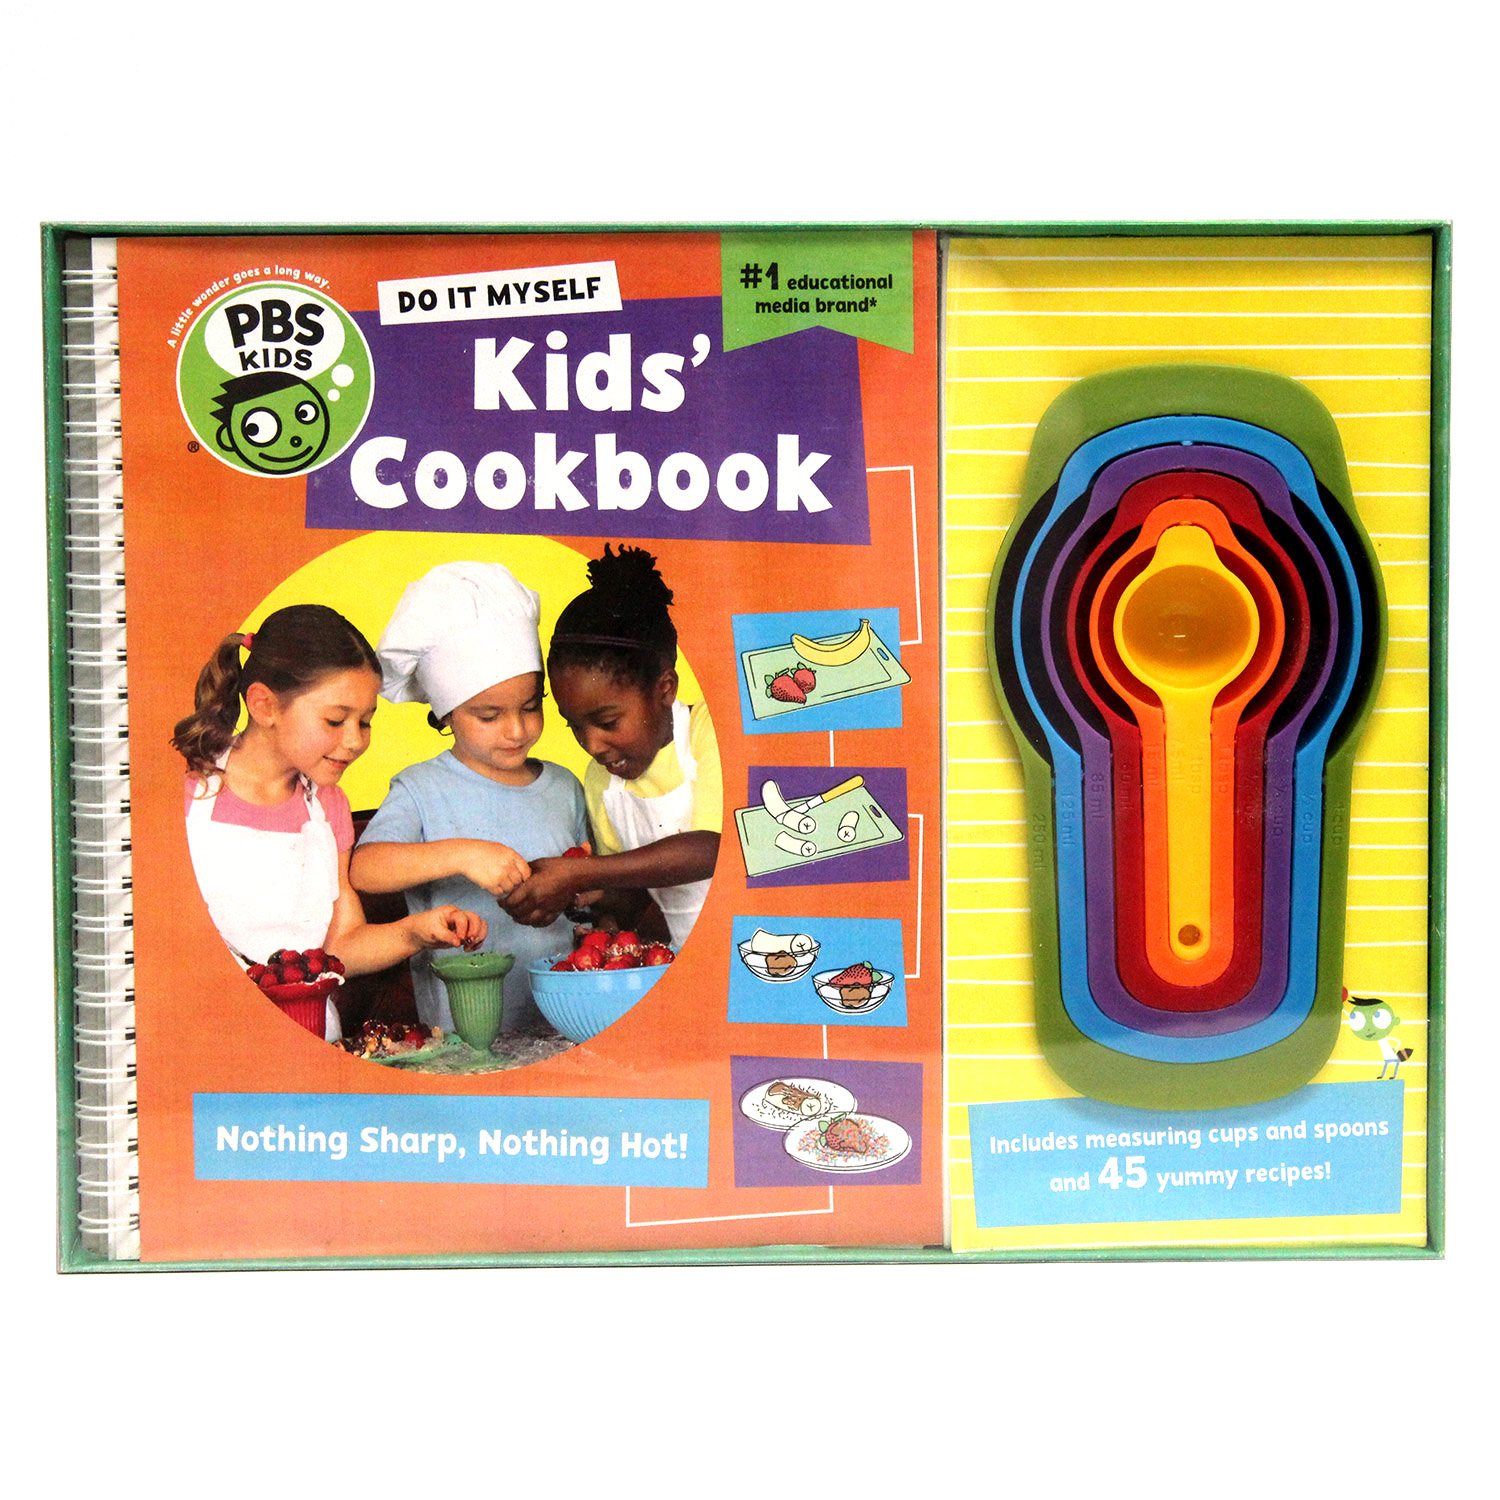 PBS KIDS Do It Myself Kids Cookbook